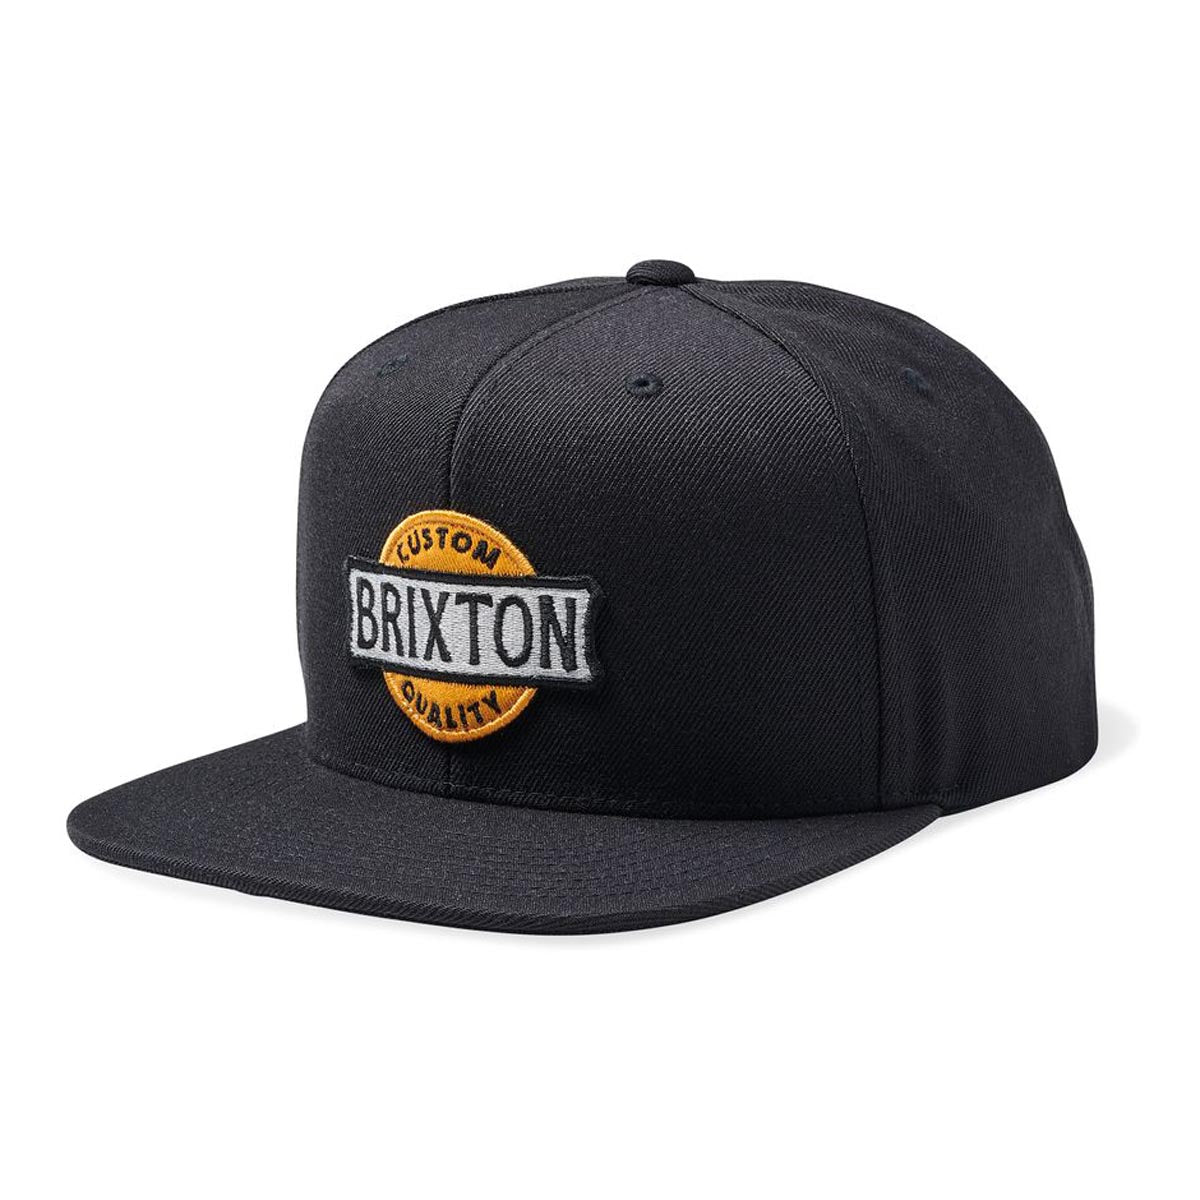 Brixton Wendall Mp Snapback Hat - Black image 1